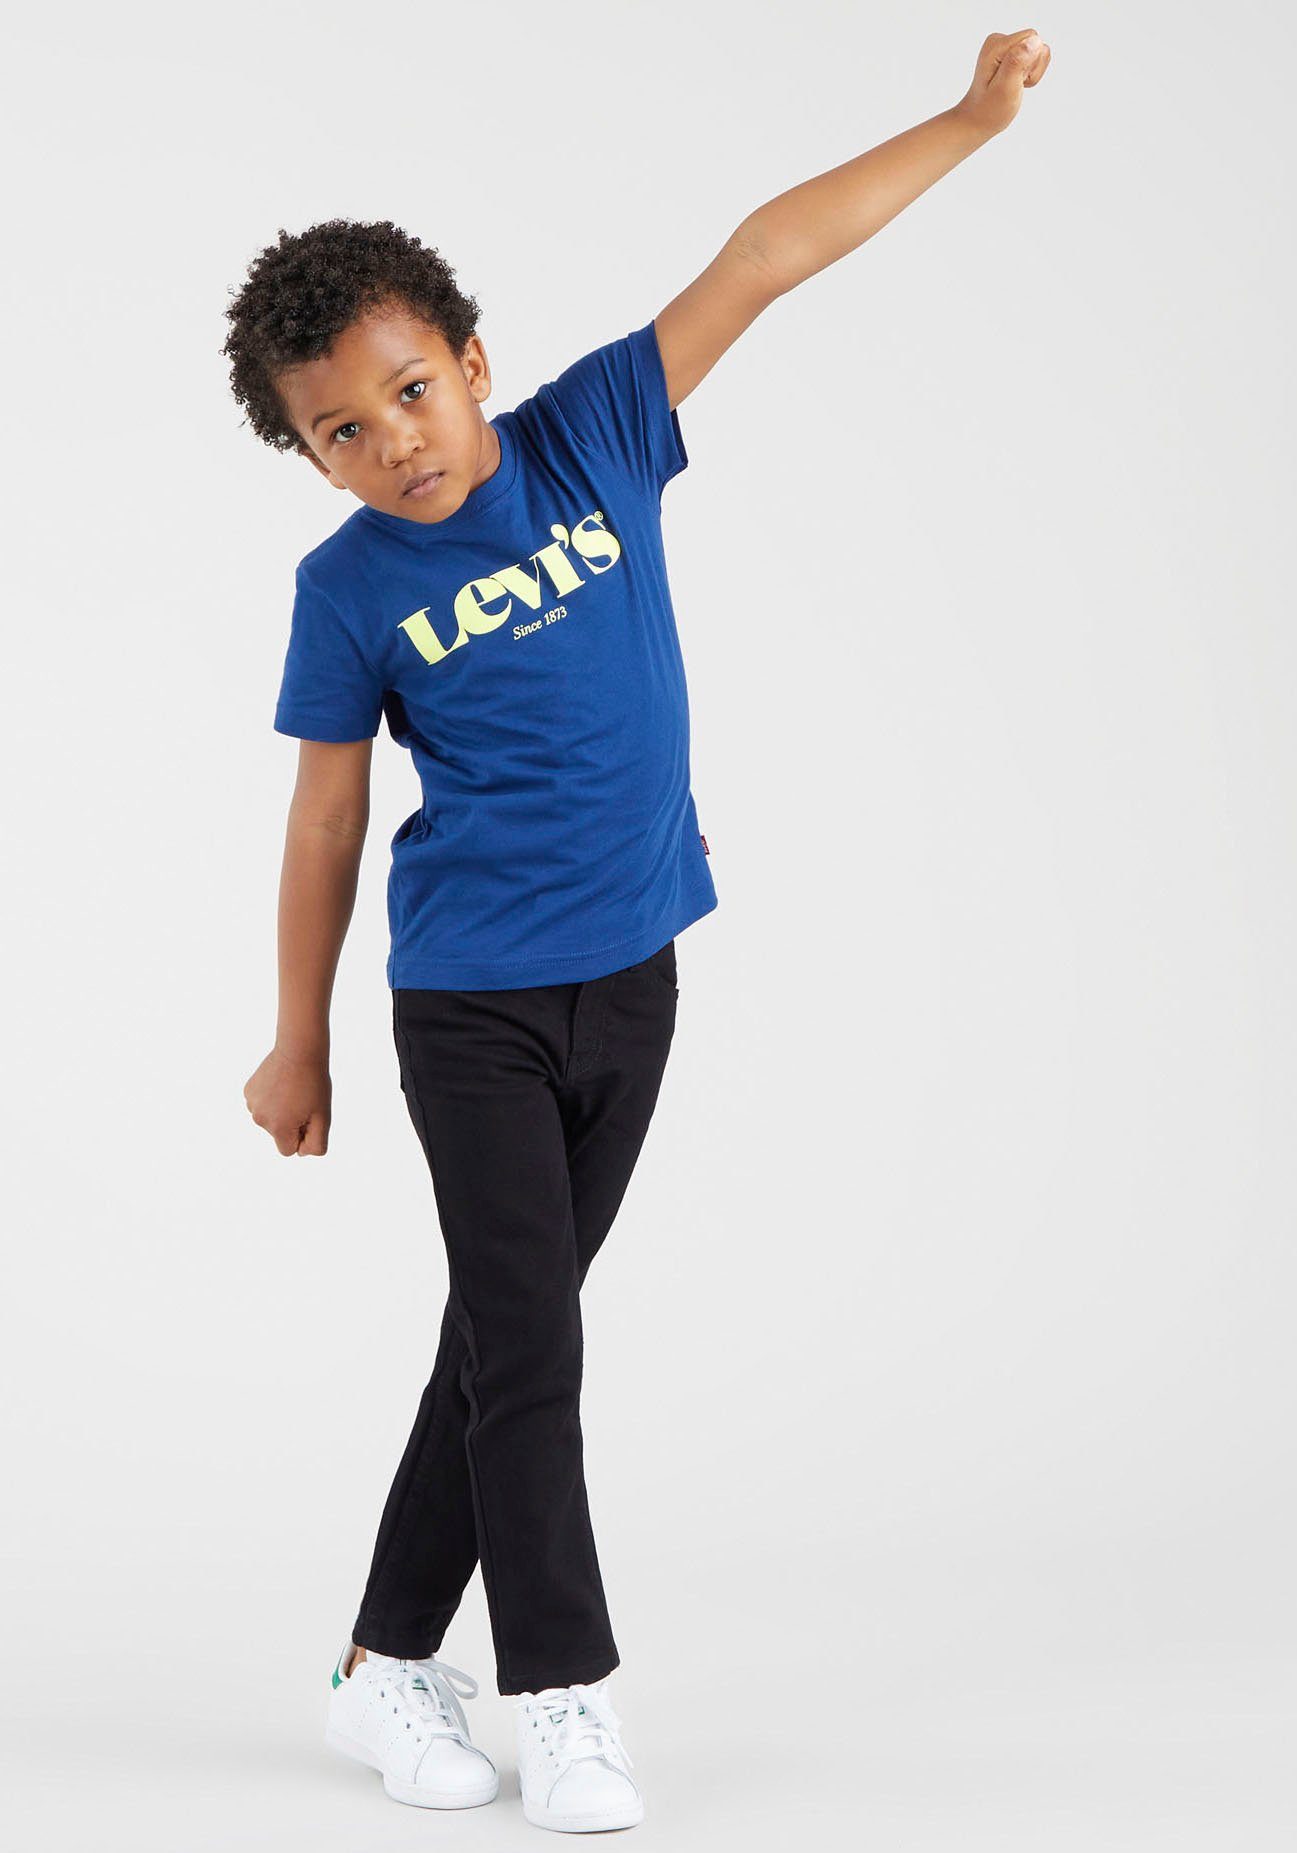 for 510 Kids BOYS JEANS Skinny-fit-Jeans Levi's® FIT SKINNY black